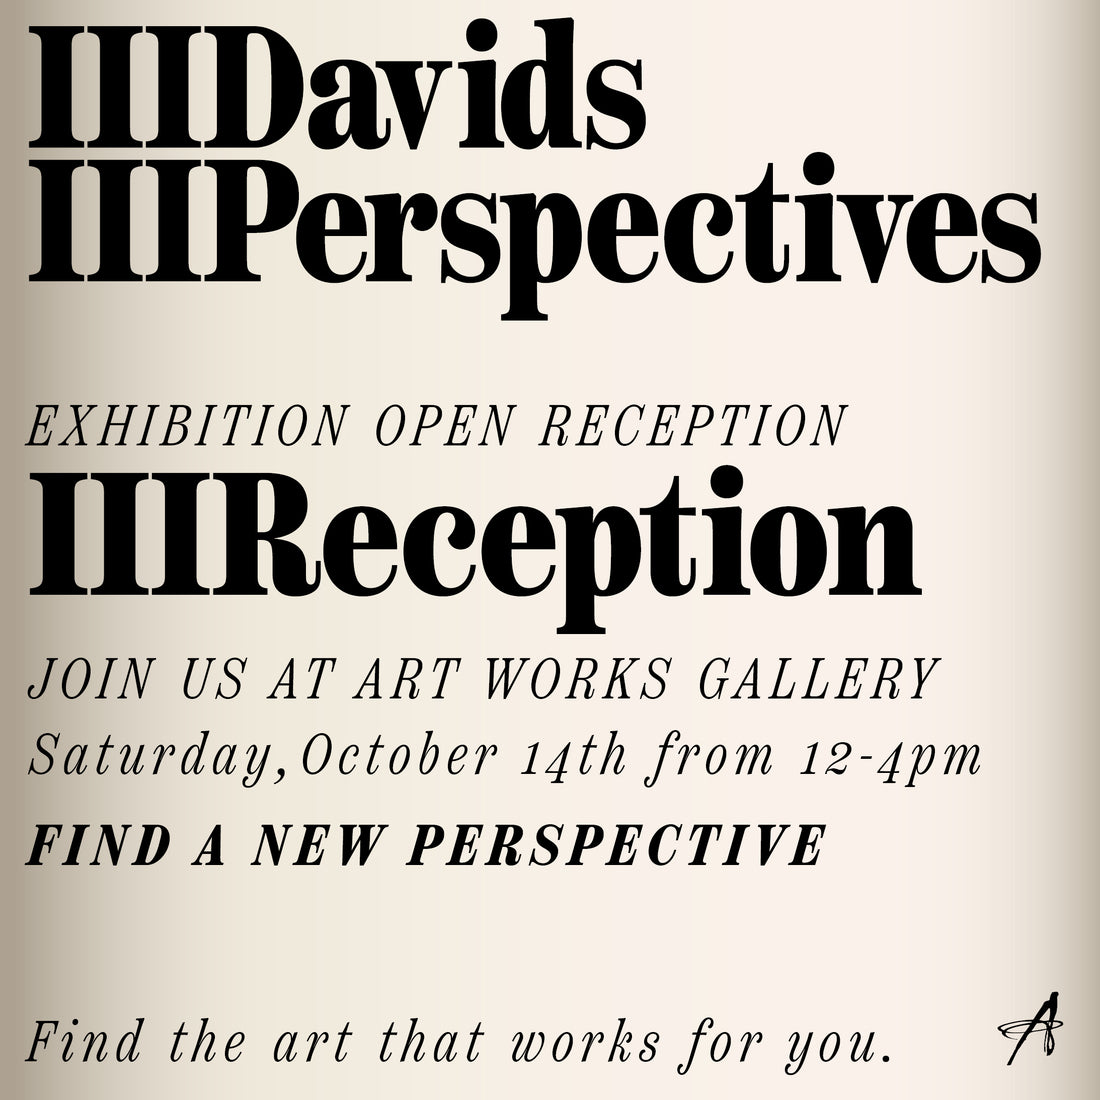 "Three Davids, Three Perspectives" exhibition open reception